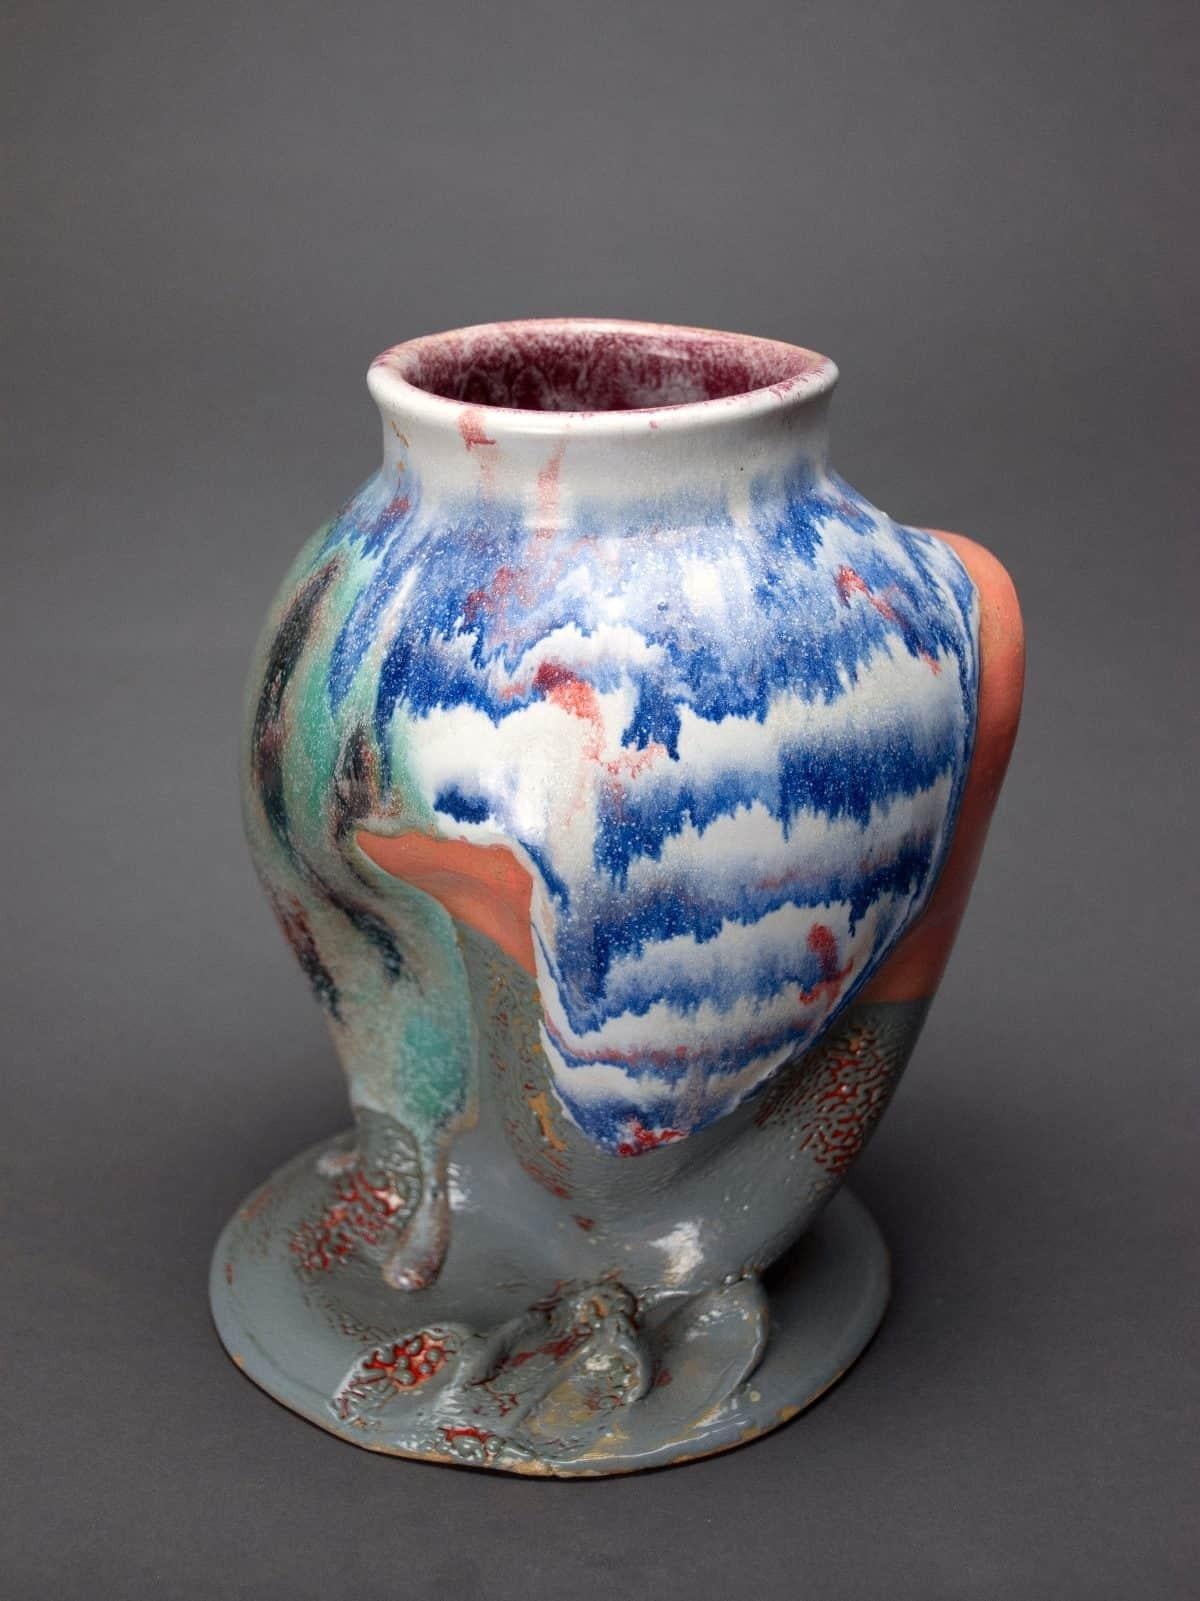 Malcolm Mobutu Smith
Hopscotch vase, 2018
Stoneware, slip, glaze, multi-fired
Measures: 5 x 5 x 8 in.